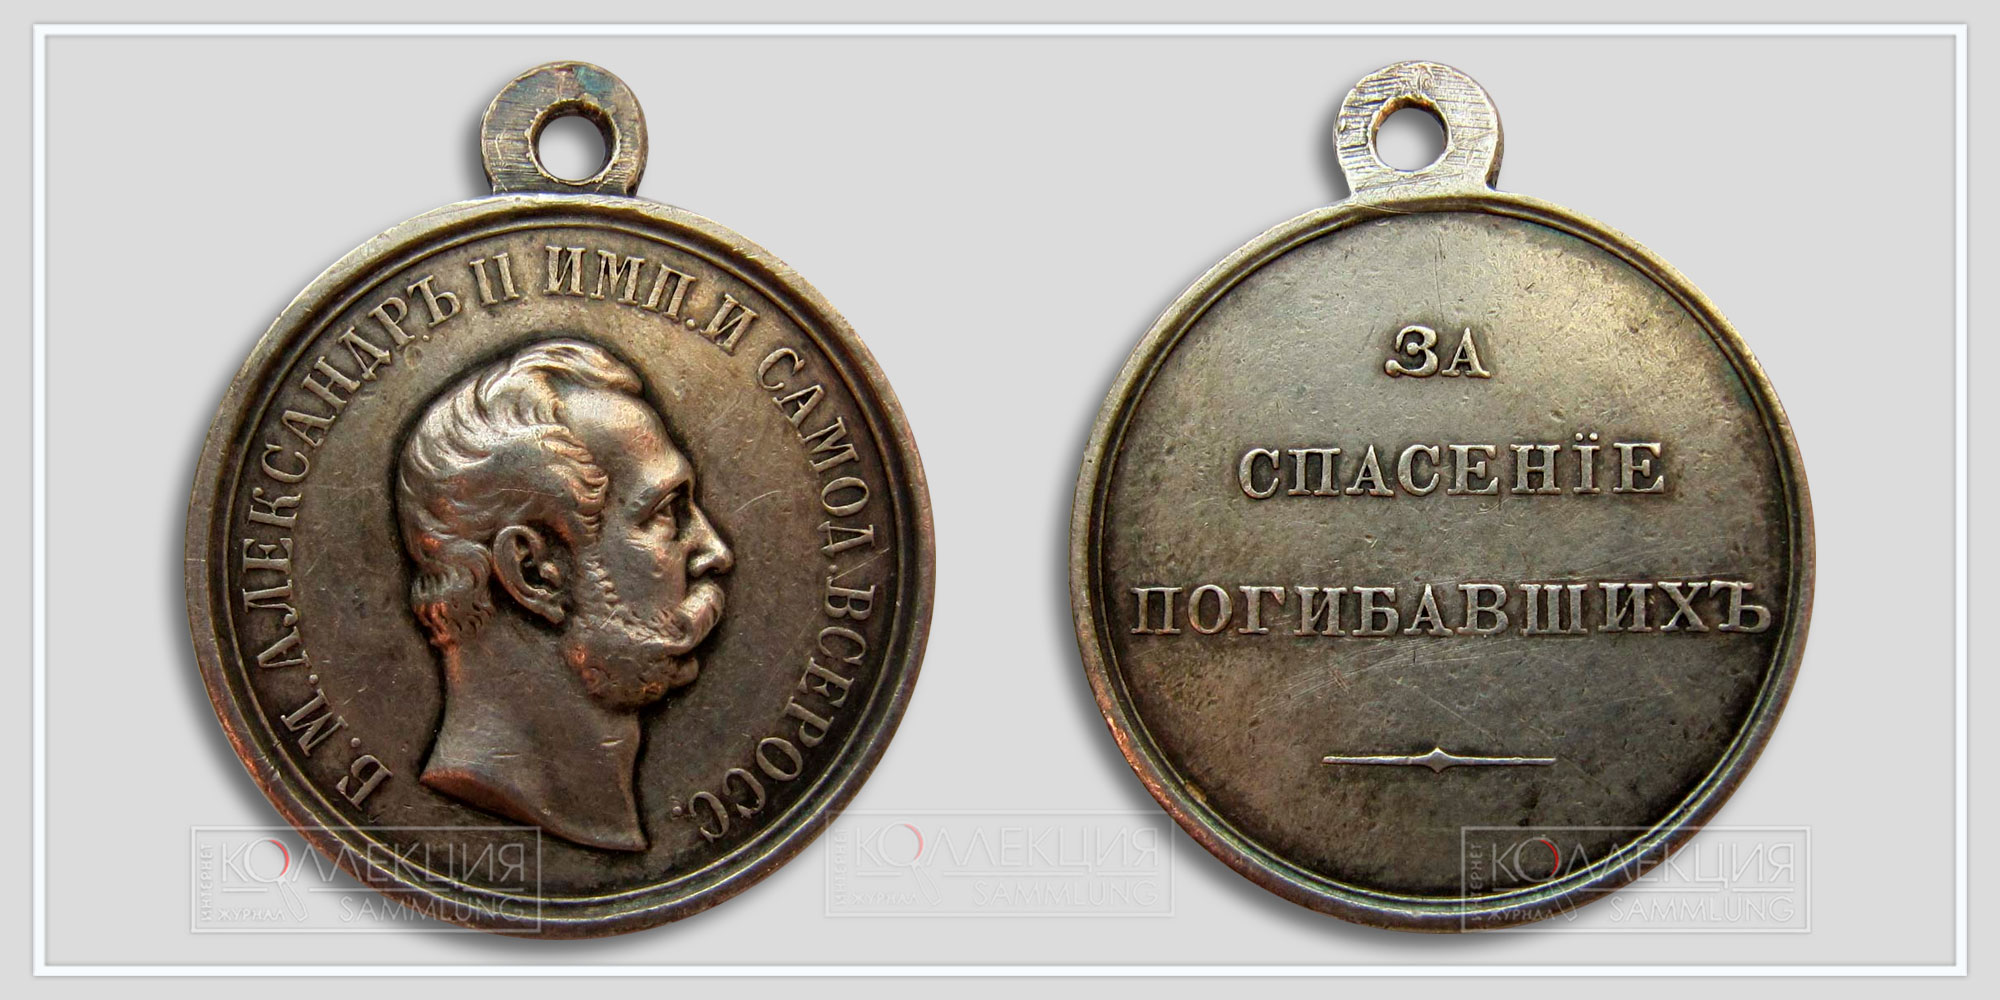 Медаль "За спасение погибавших" Александр II Из архива Фалеристика.инфо Разместил коллега Сибирякъ